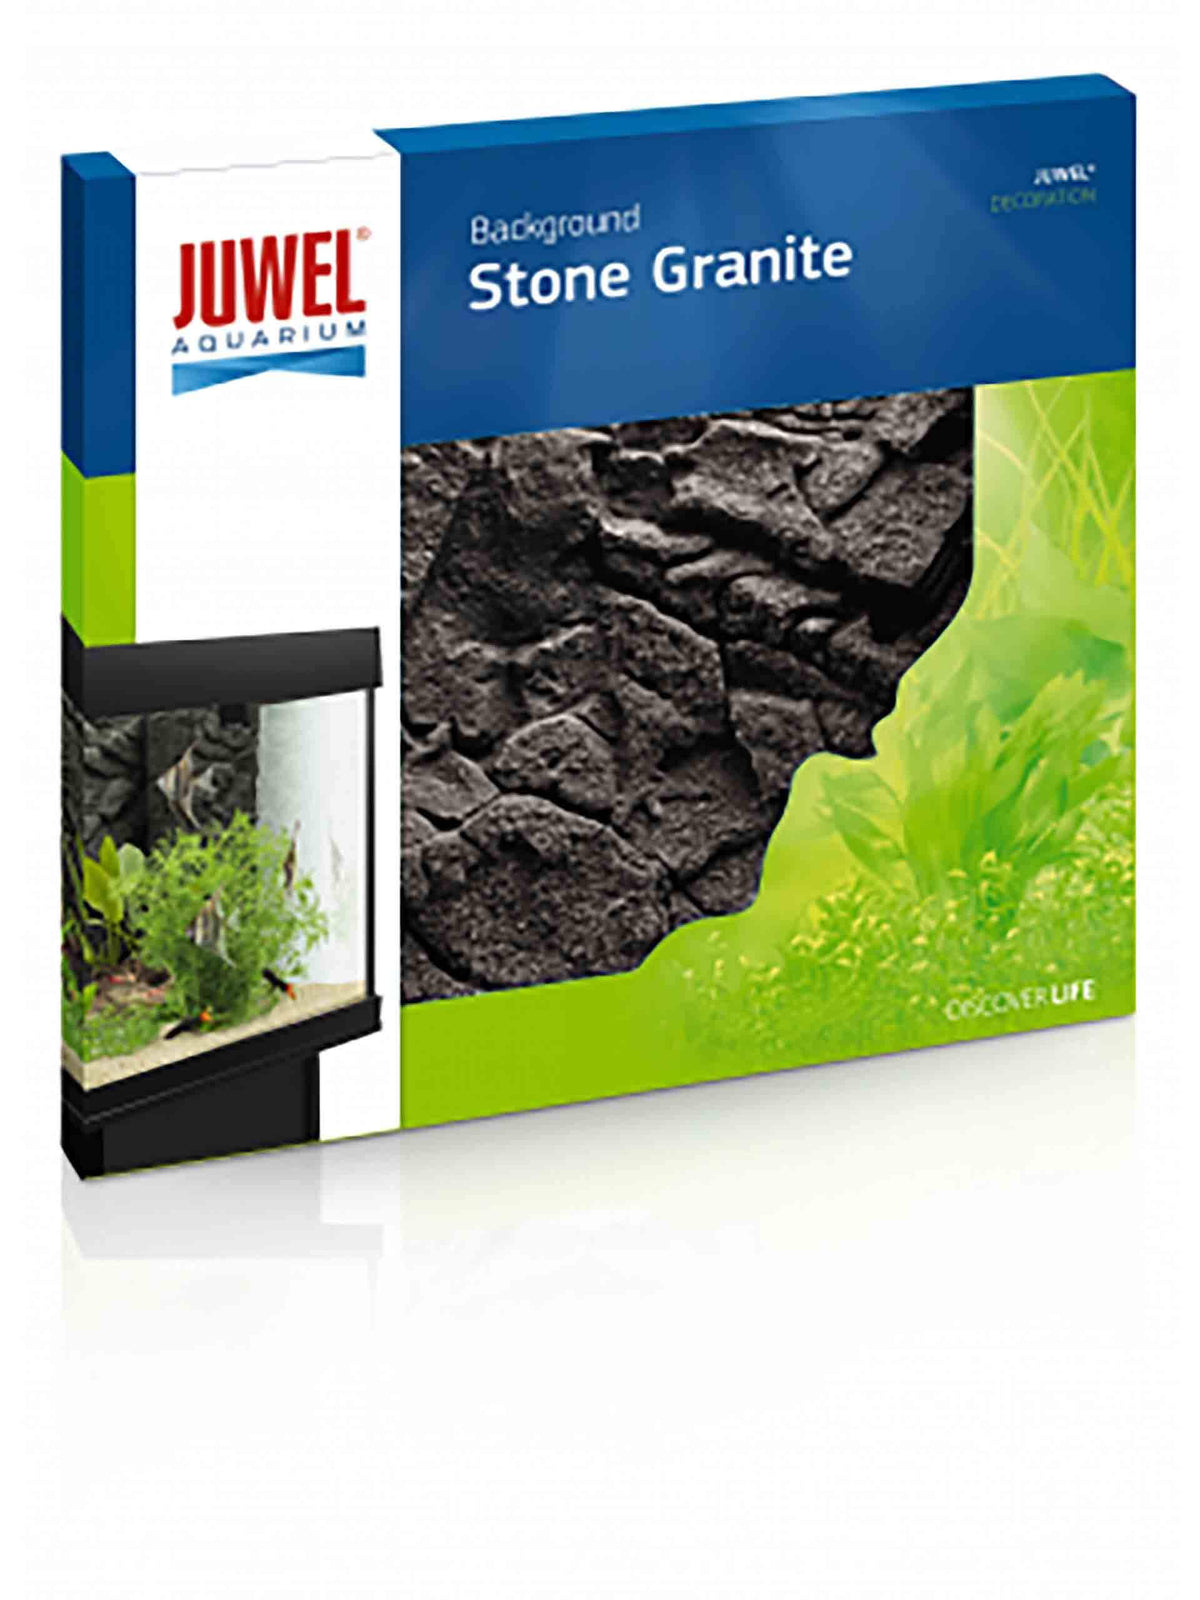 Juwel Background Stone Granite - 60x55cm - In store pickup only